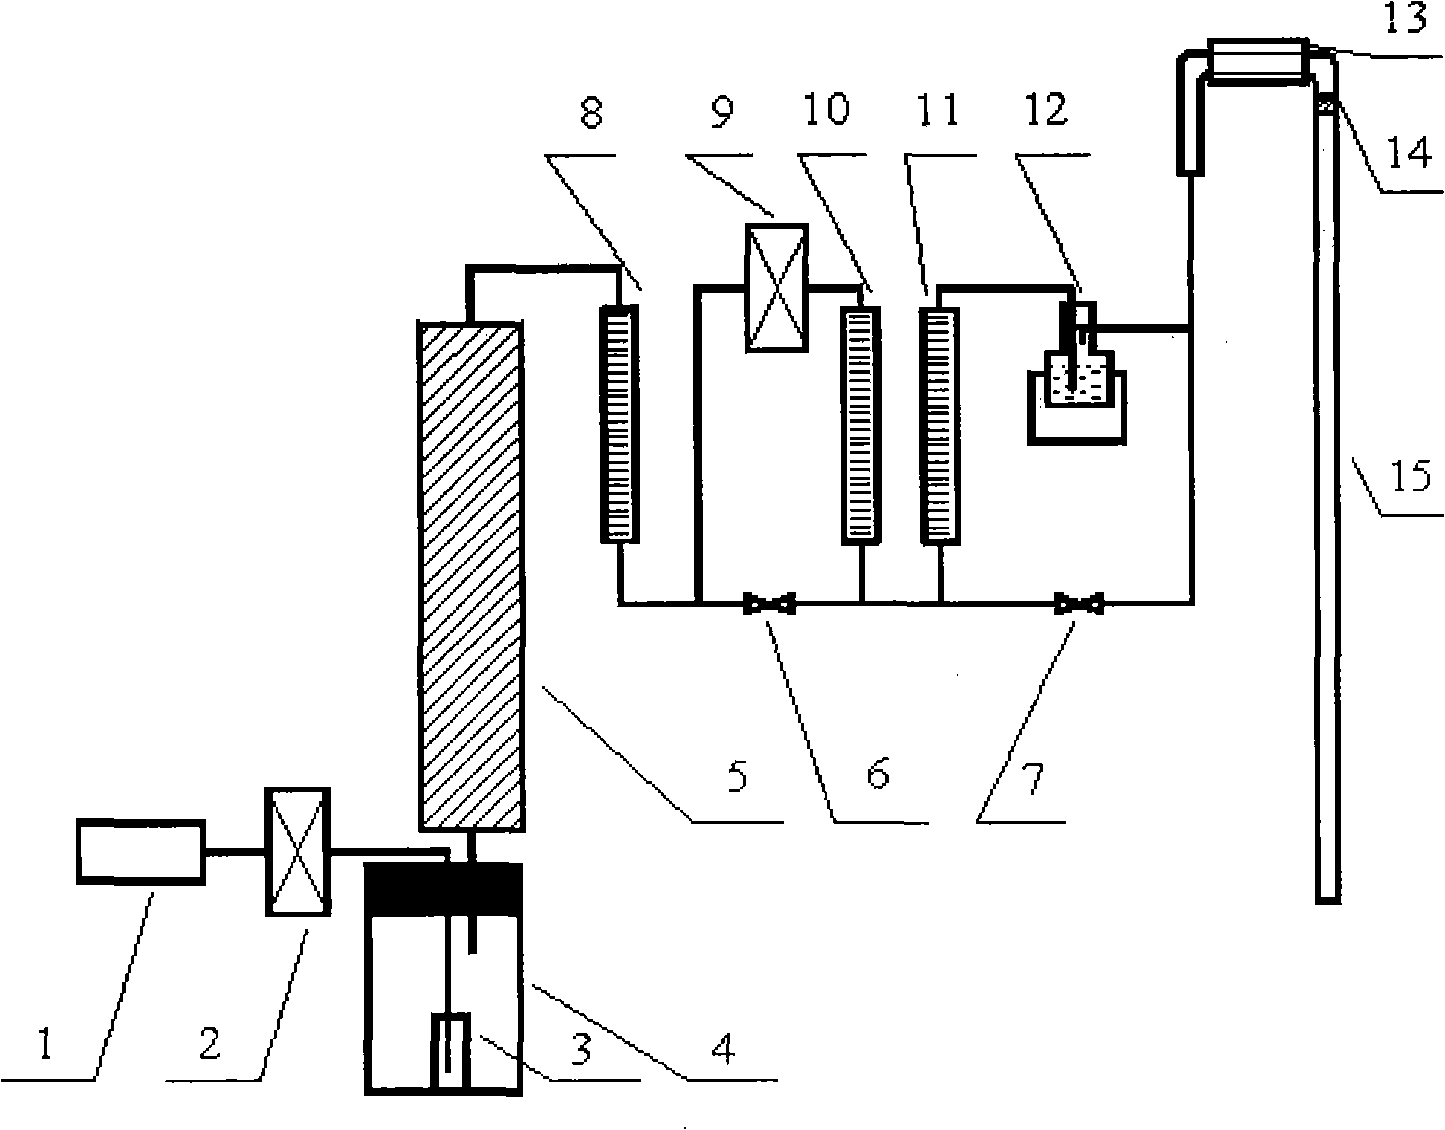 Quasi-monodispersed submicron aerosol generating device using vaporization condensation process